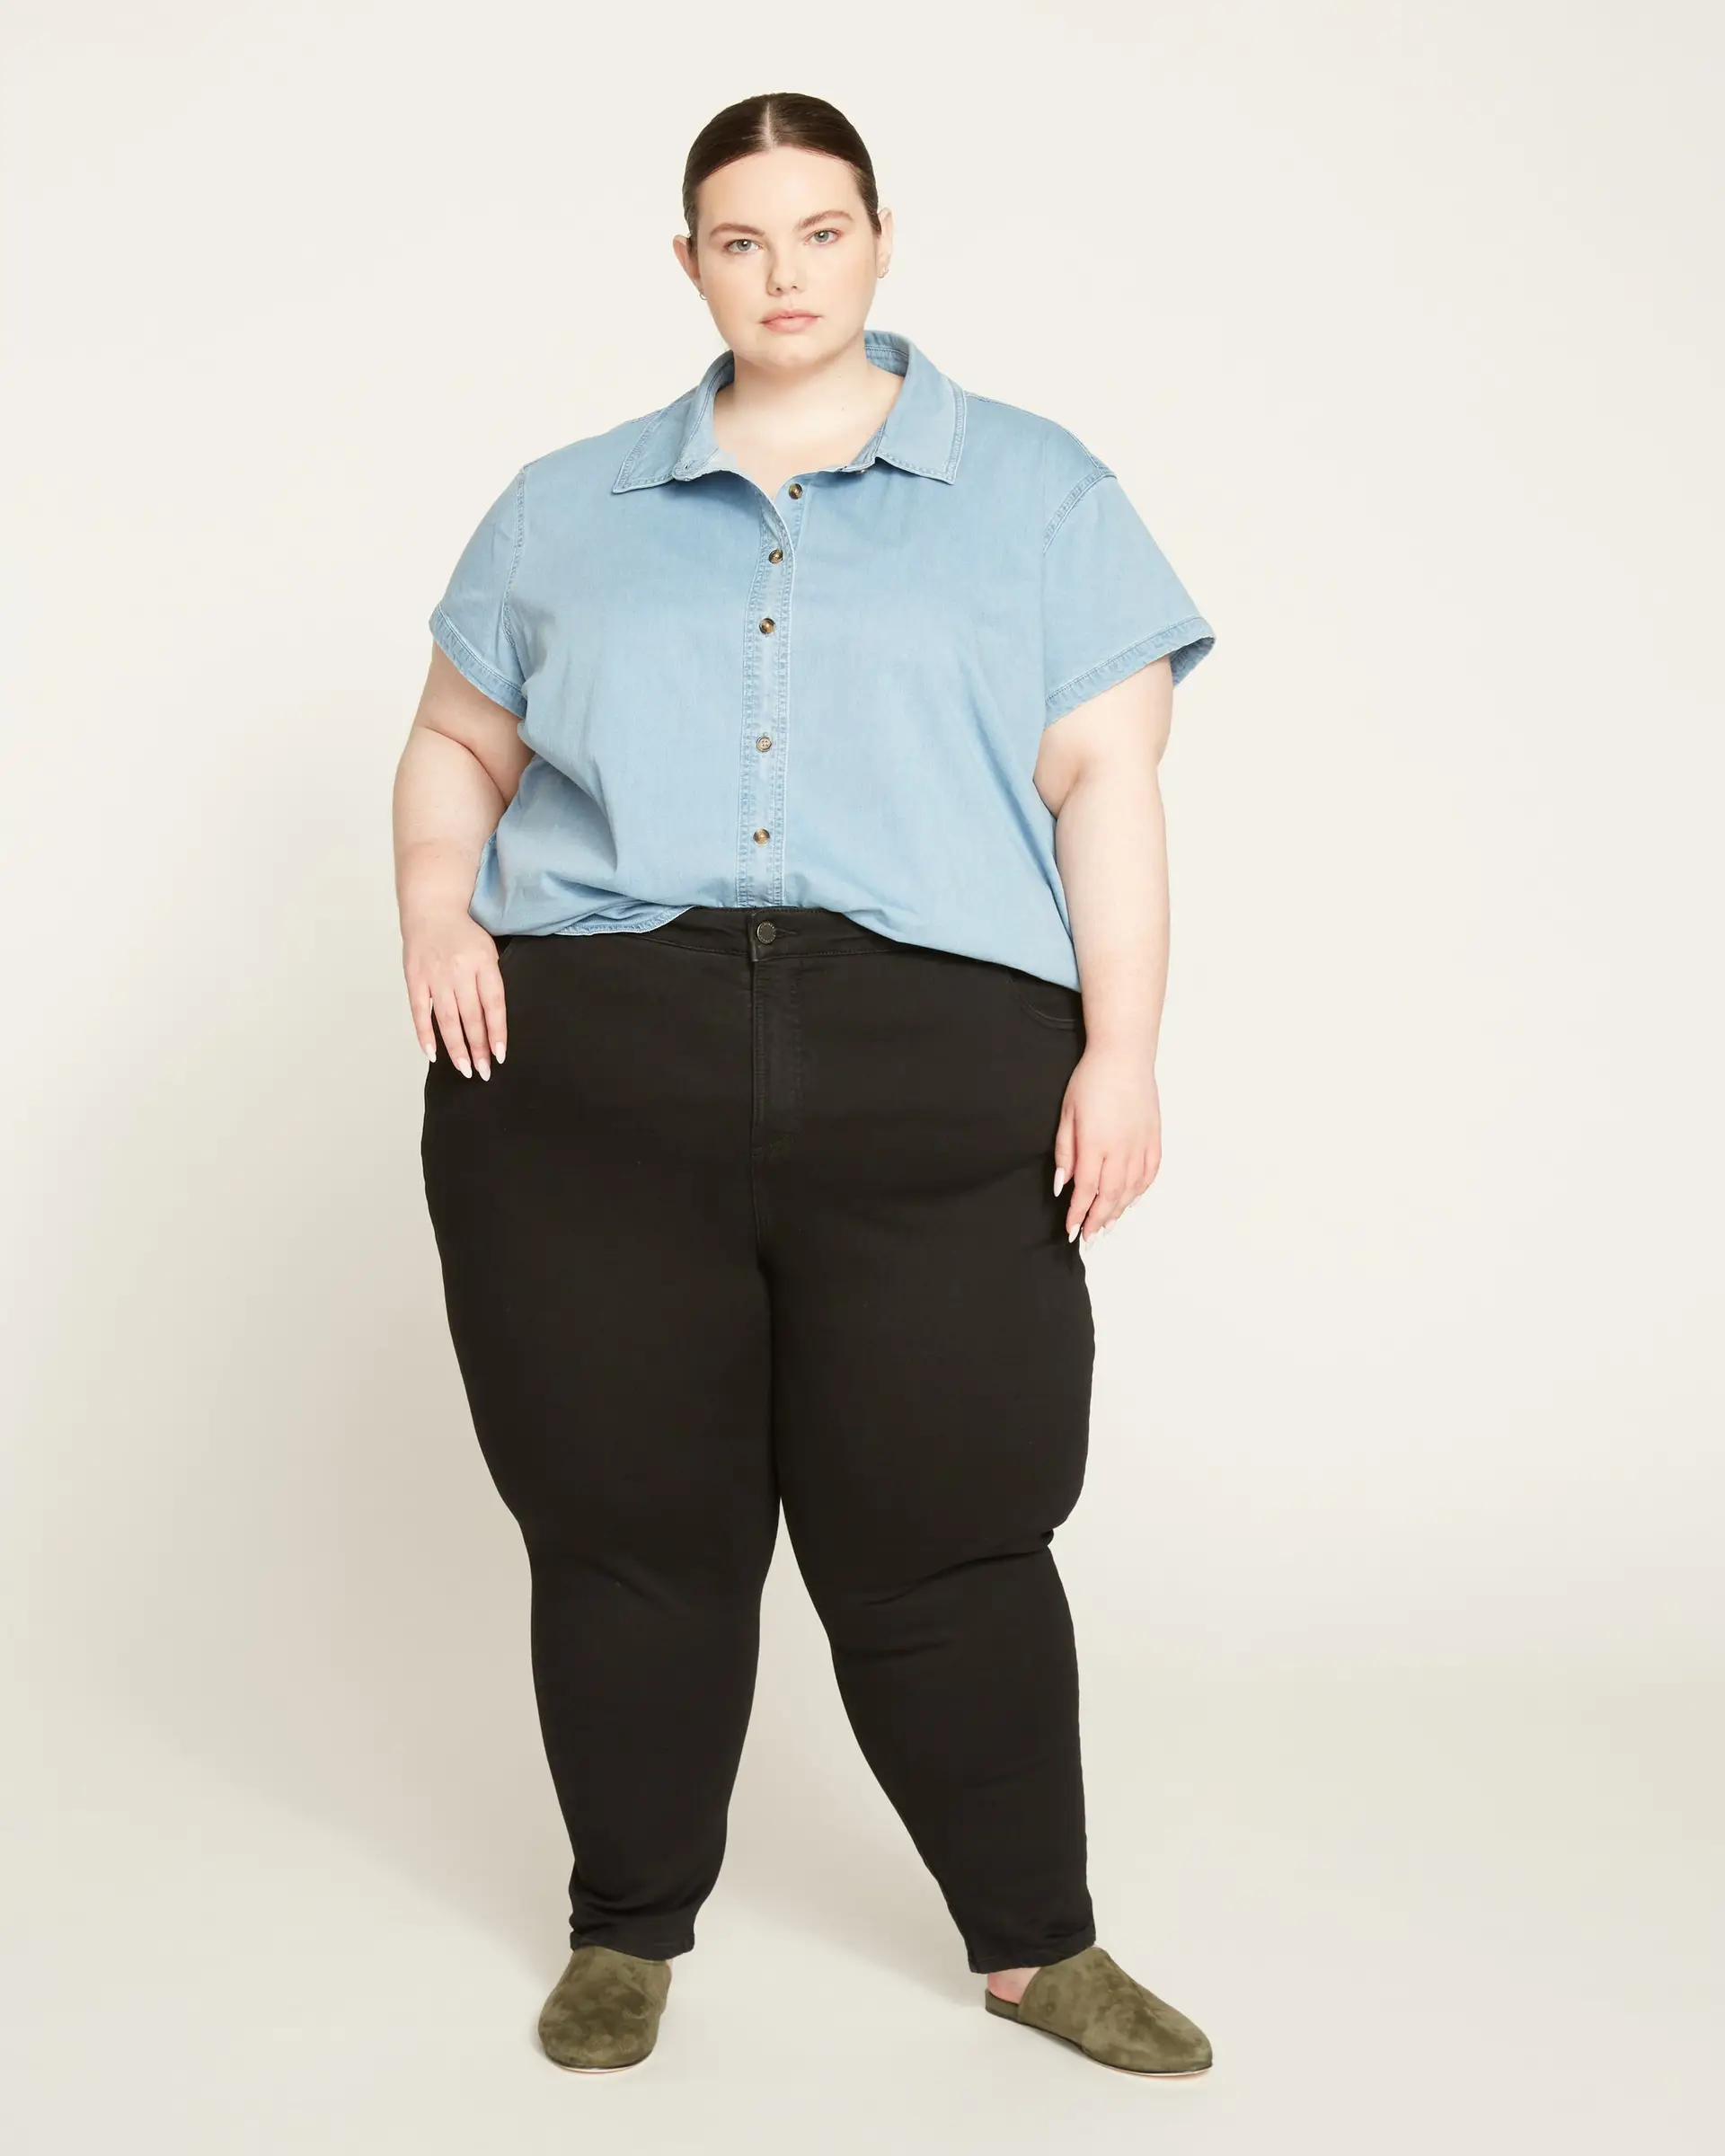 10 Best Plus-Size Black Work Pants for Women 2023 | The Strategist